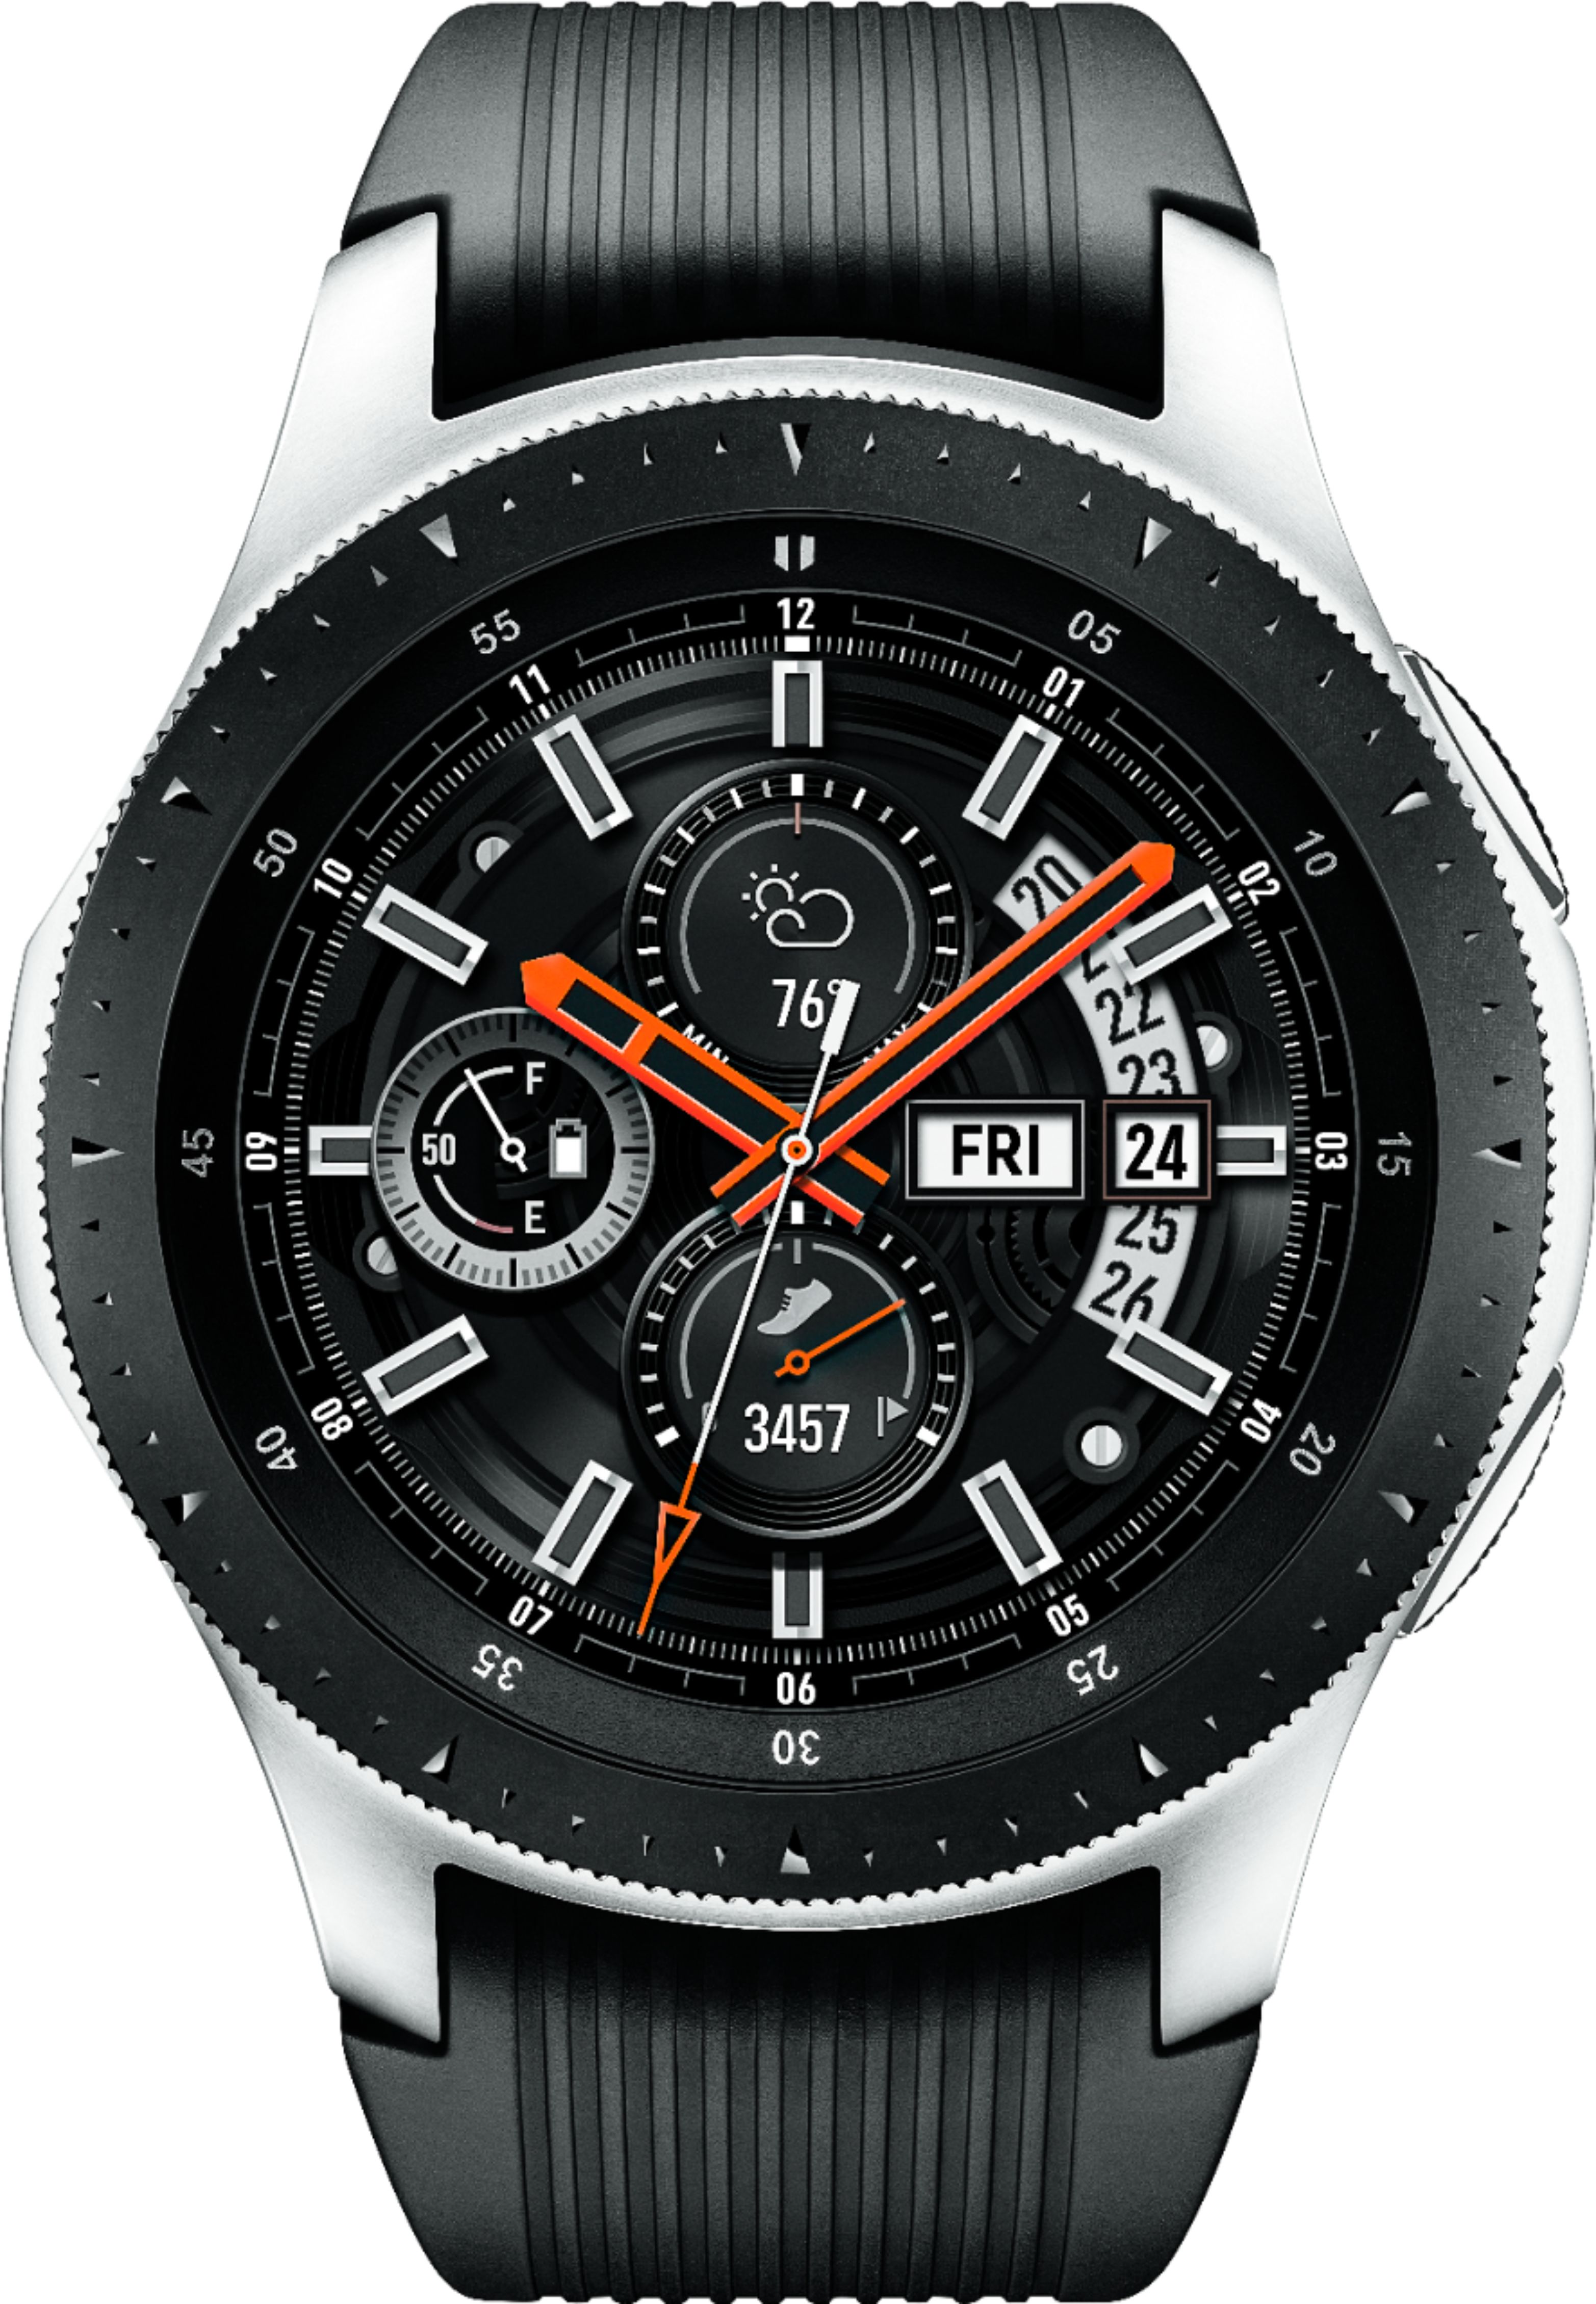 Samsung Galaxy Watch Smartwatch 46mm Stainless  - Best Buy